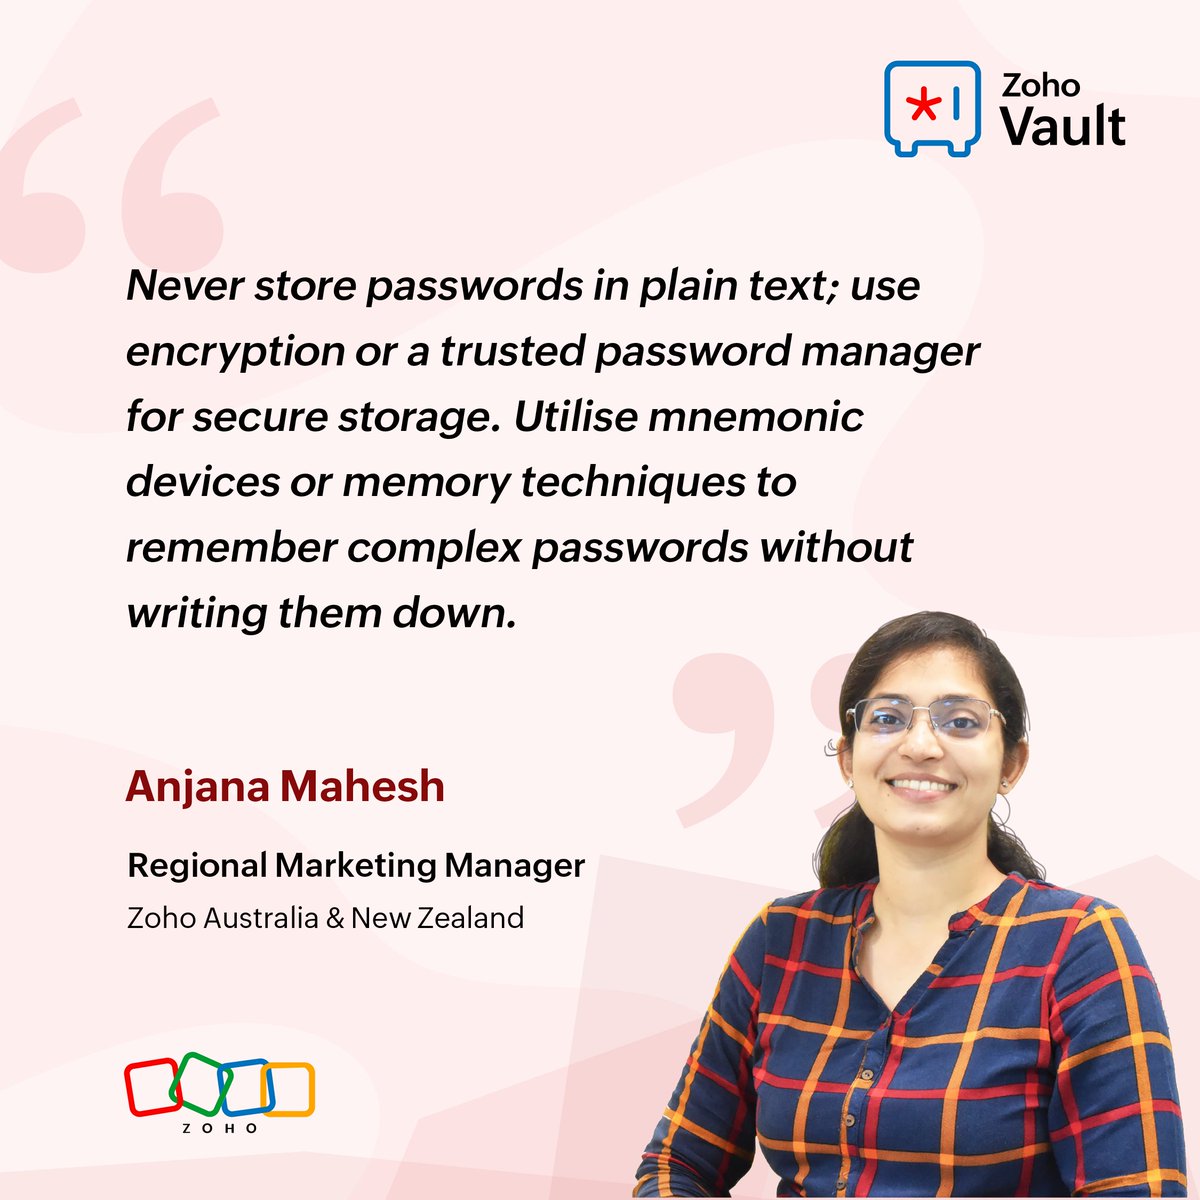 Password security tip of the day from Anjana Mahesh, Regional Marketing Manager, @Zoho Australia & New Zealand. 😁
#WorldPasswordDay #StaySafeOnline